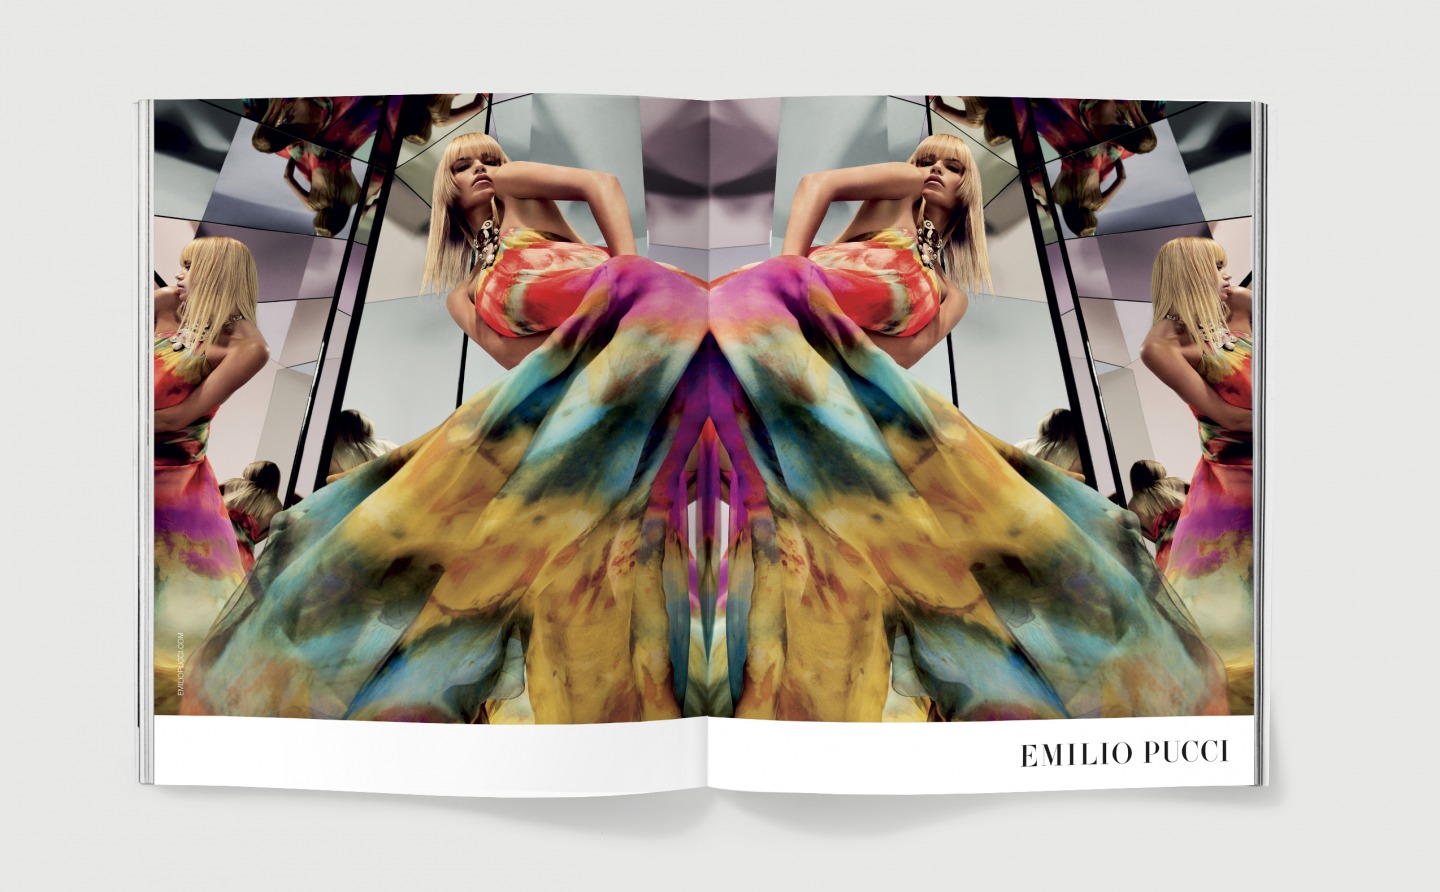 Natasha Poly is a 70s Dream in Emilio Pucci's Spring 2015 Ads